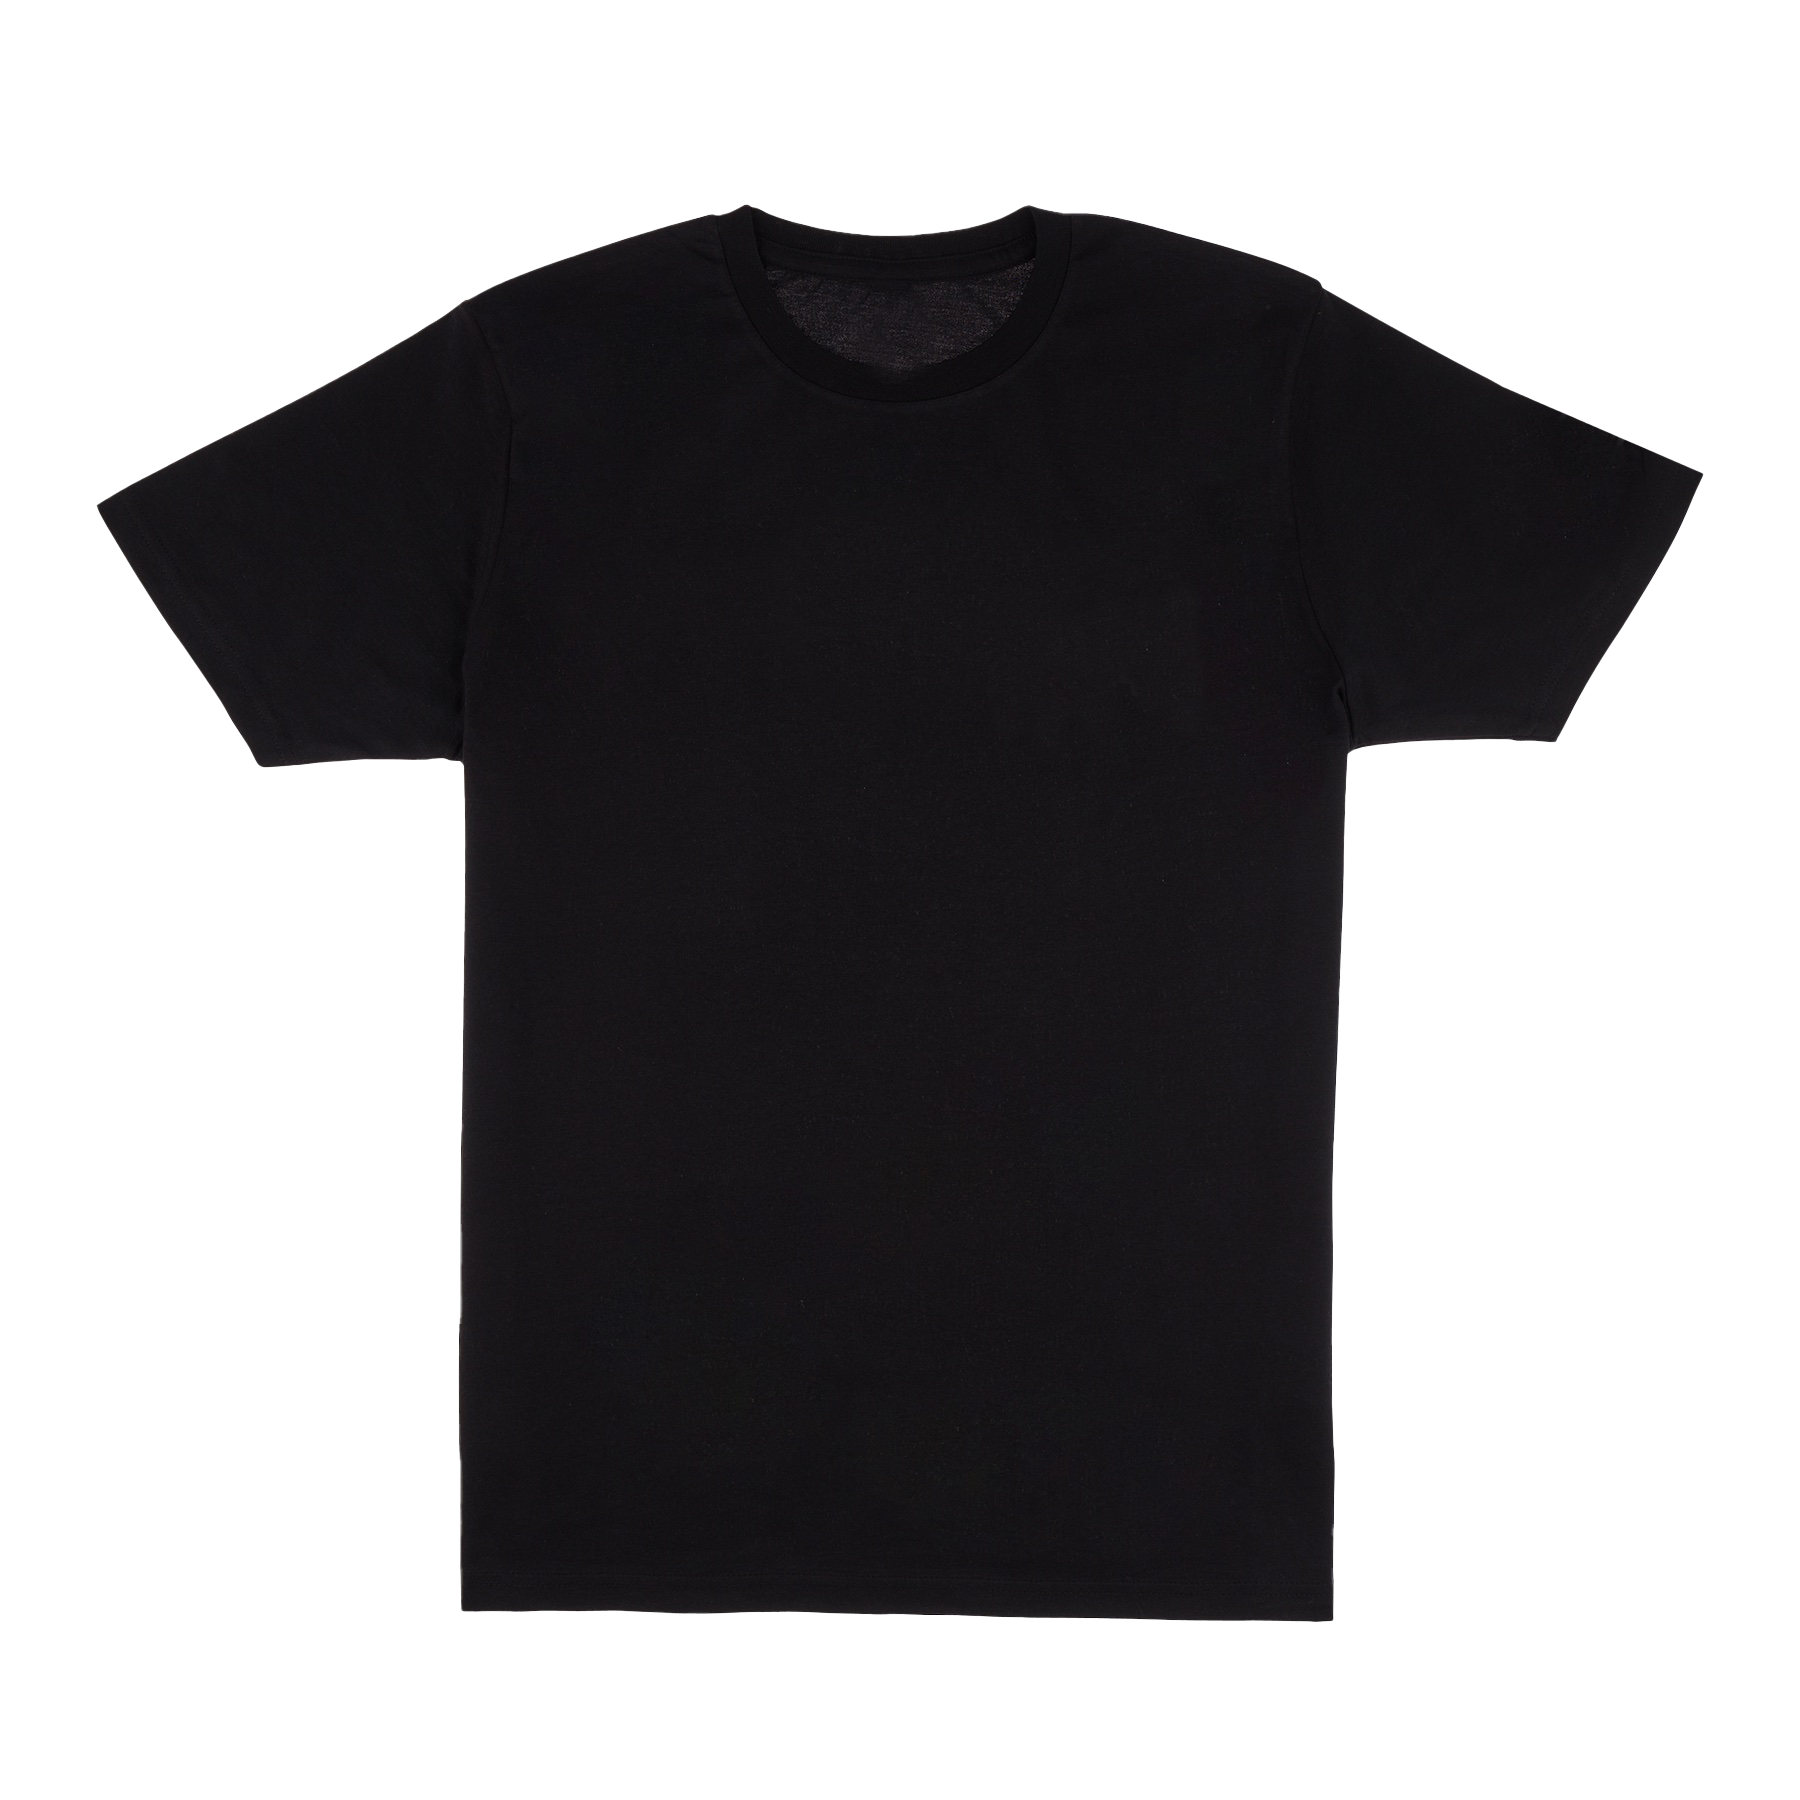 CHAOS - Black Chaos T-Shirt with back print